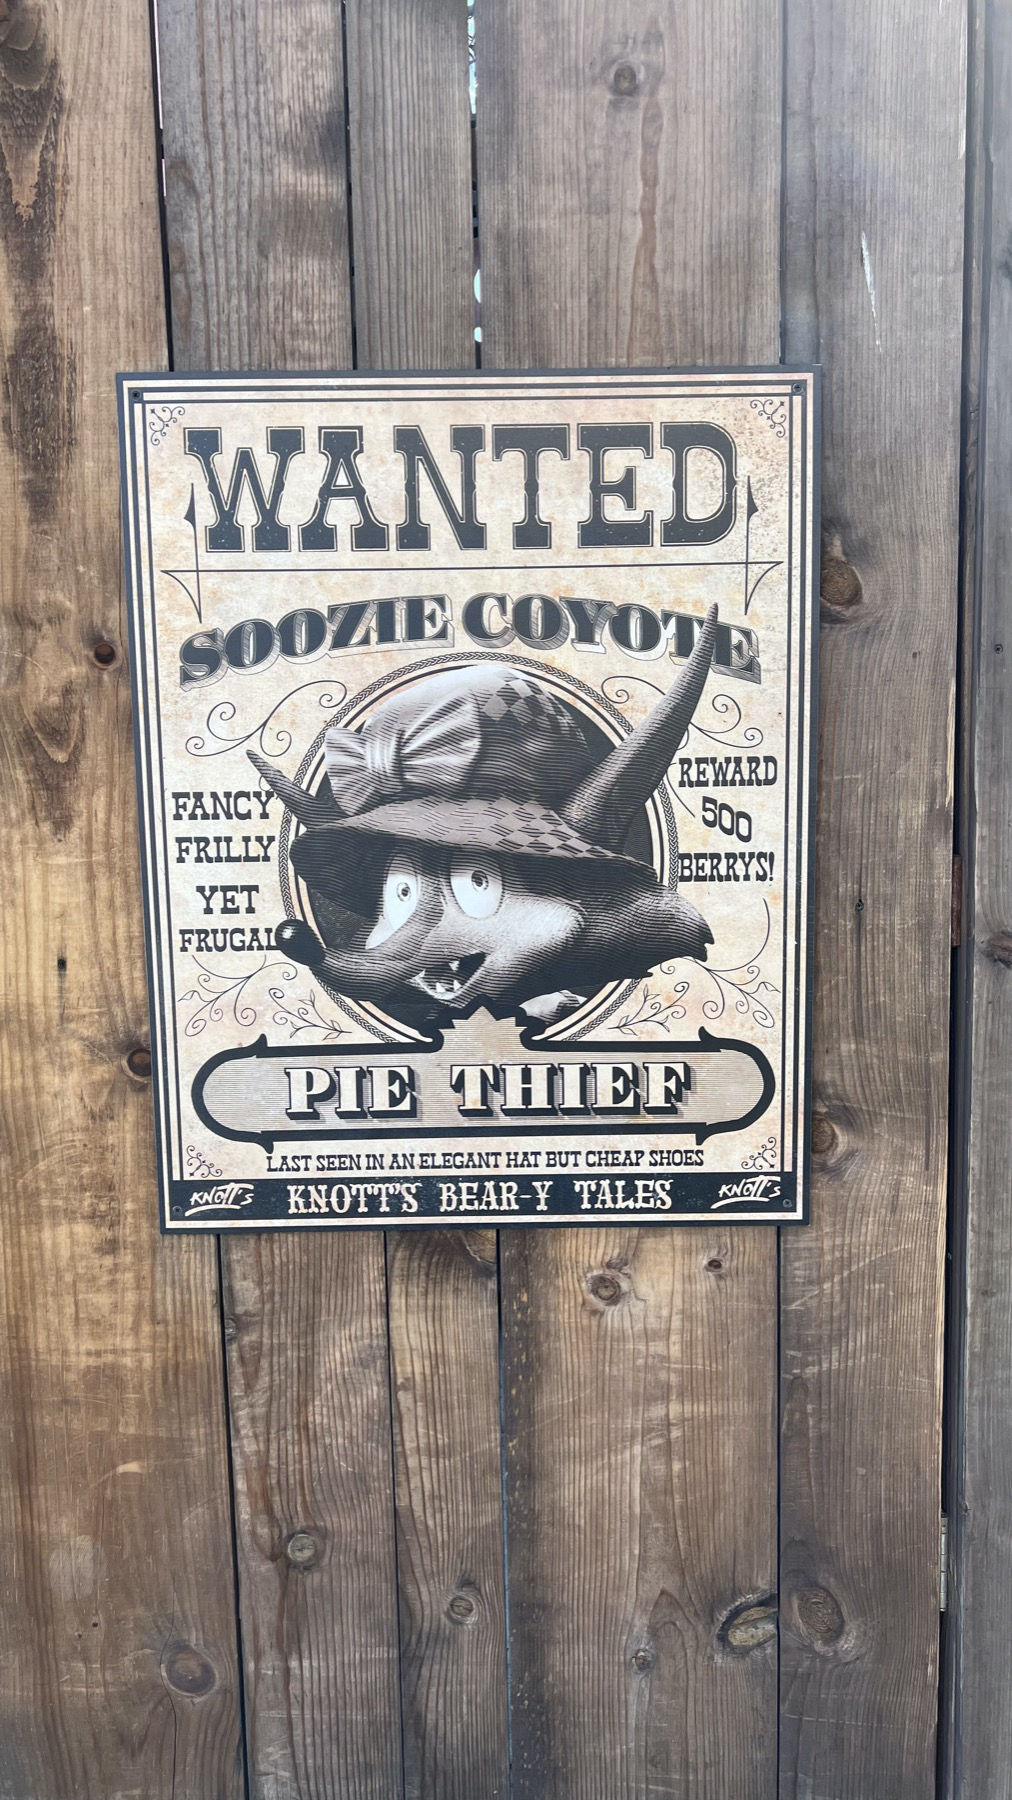 Wanted Soozie Coyote